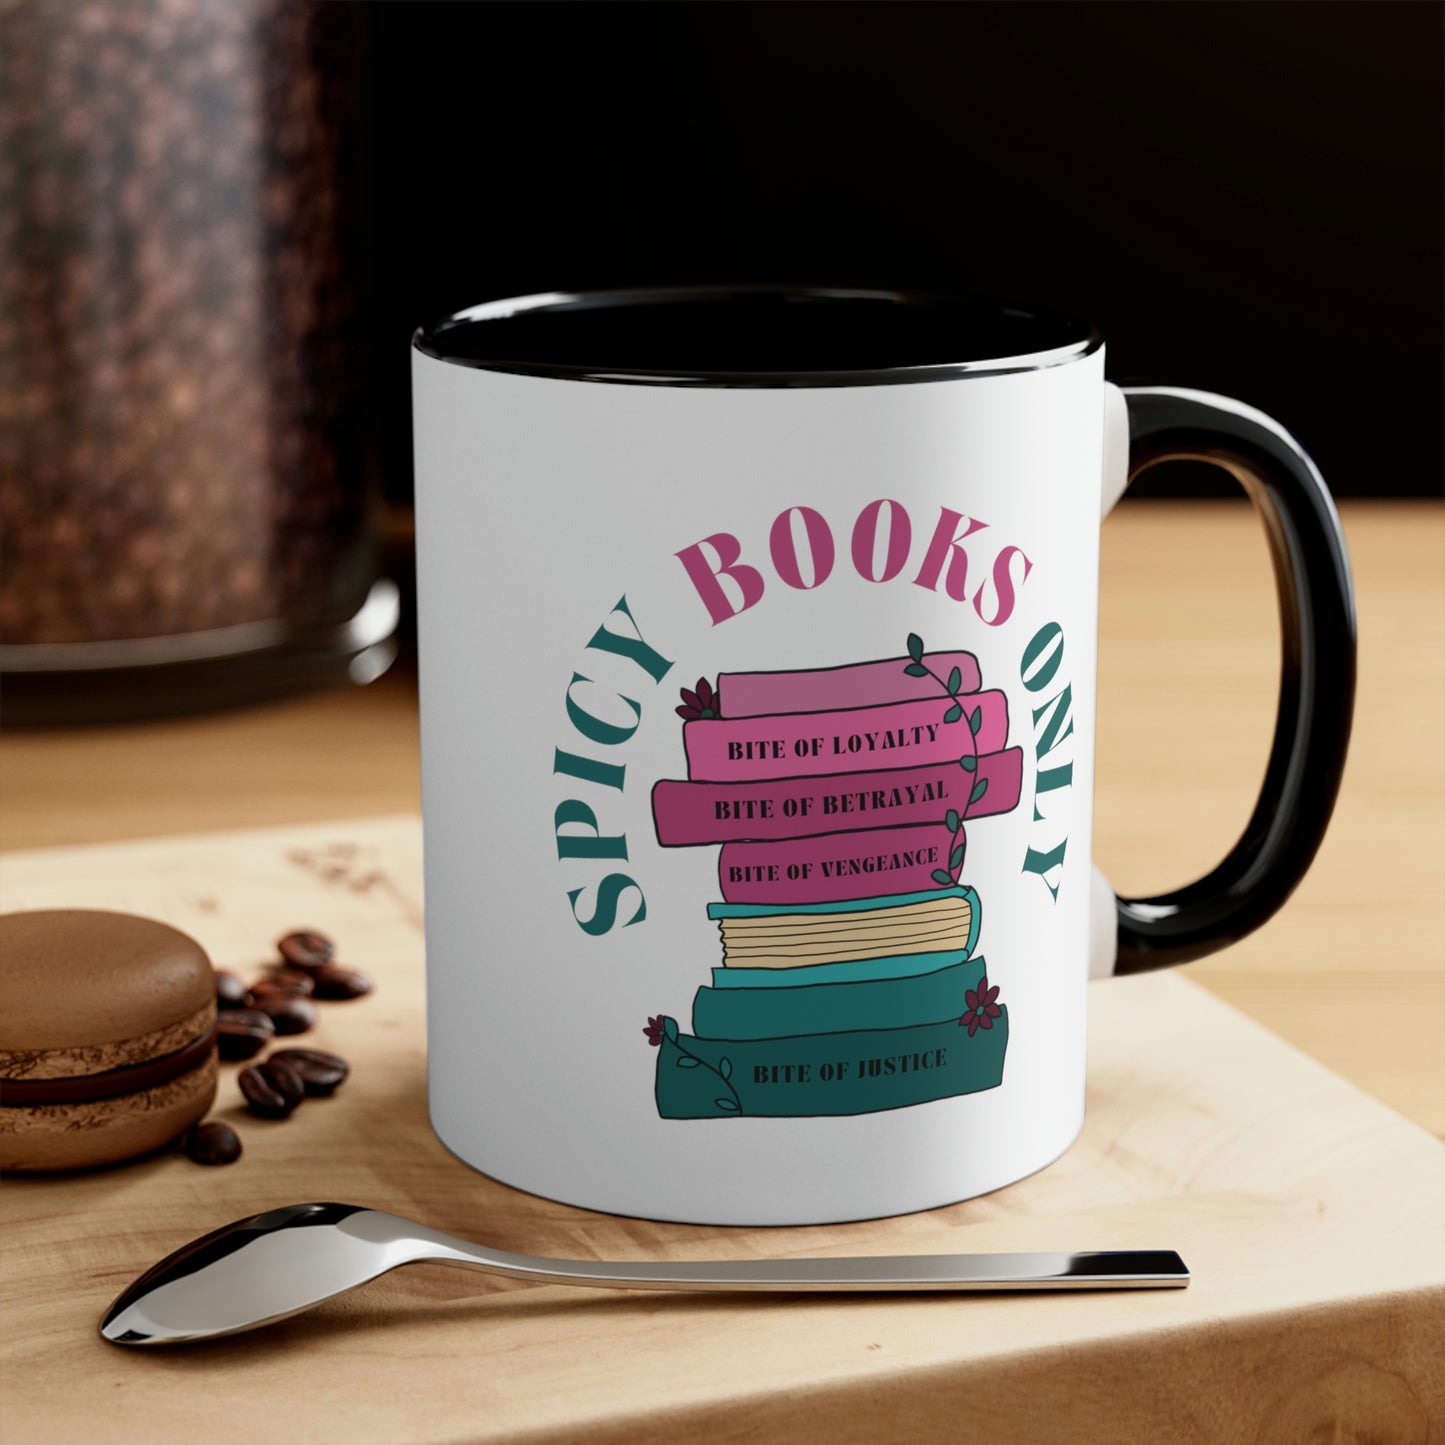 Smutty Books Only Mug